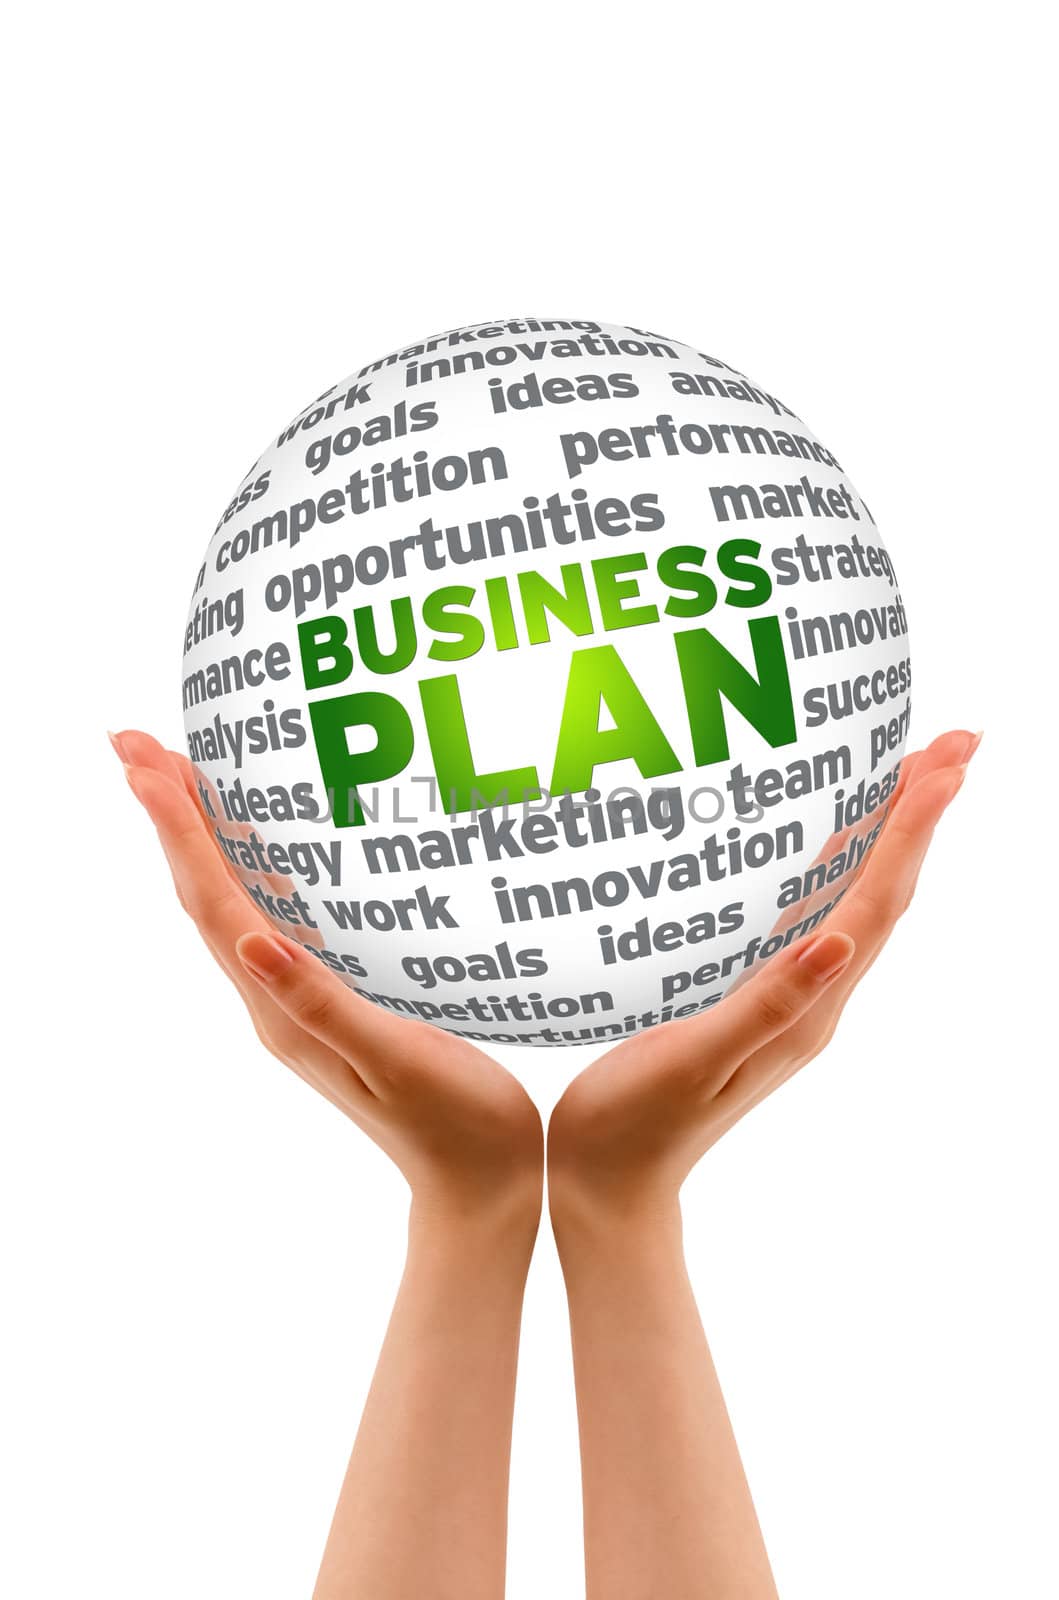 Business Plan by kbuntu